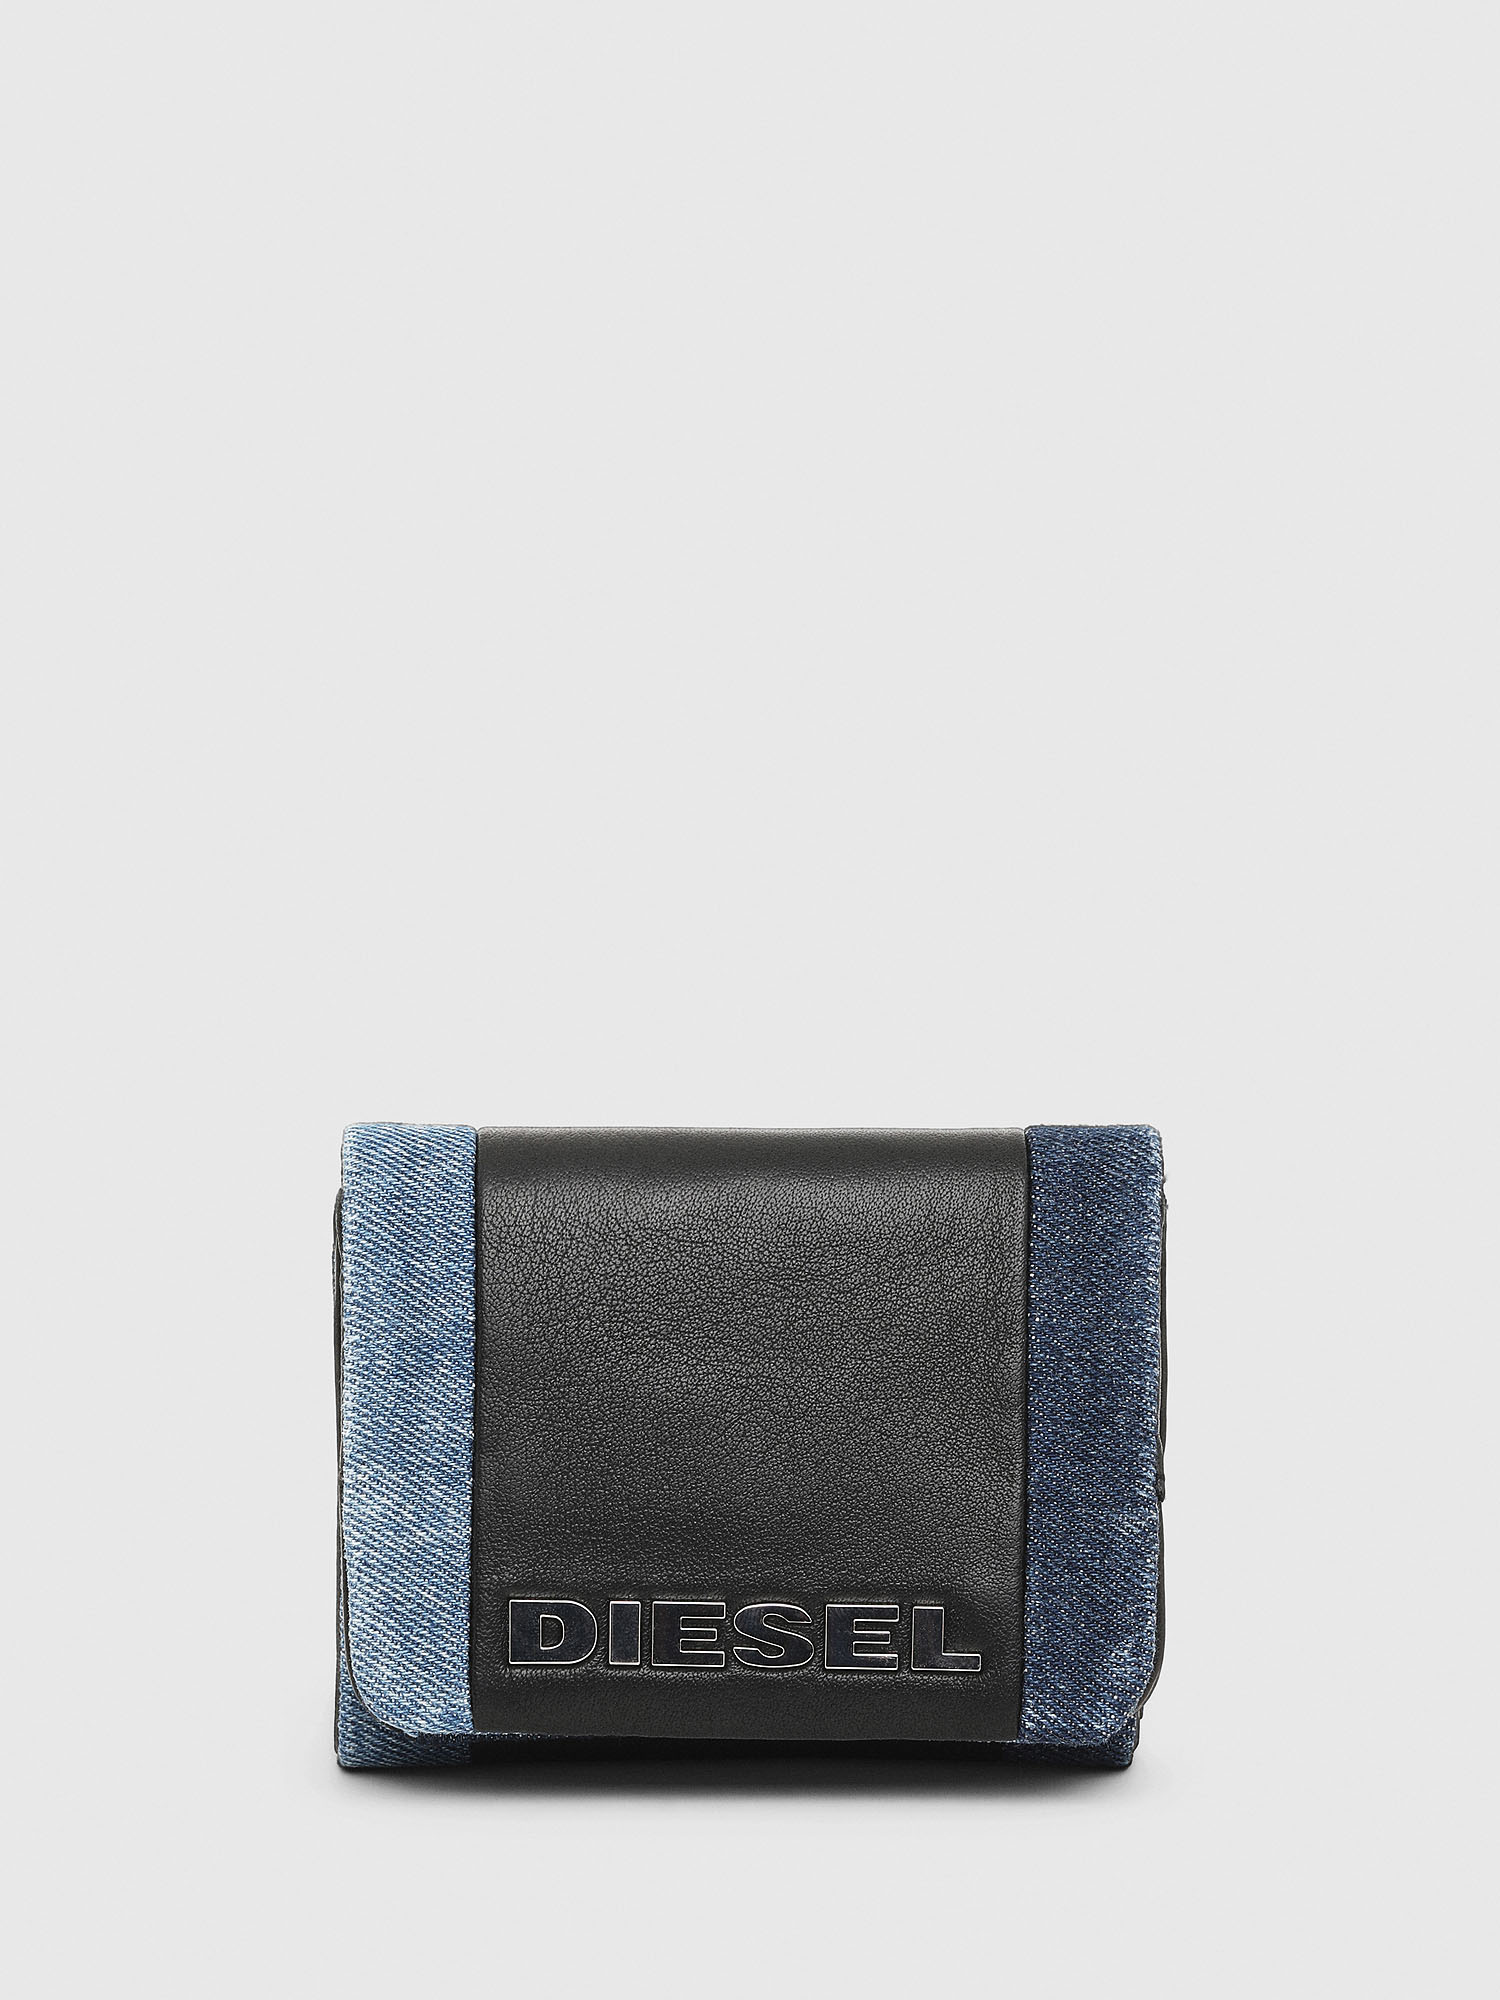 Diesel - LORETTA, Black/Blue - Image 1